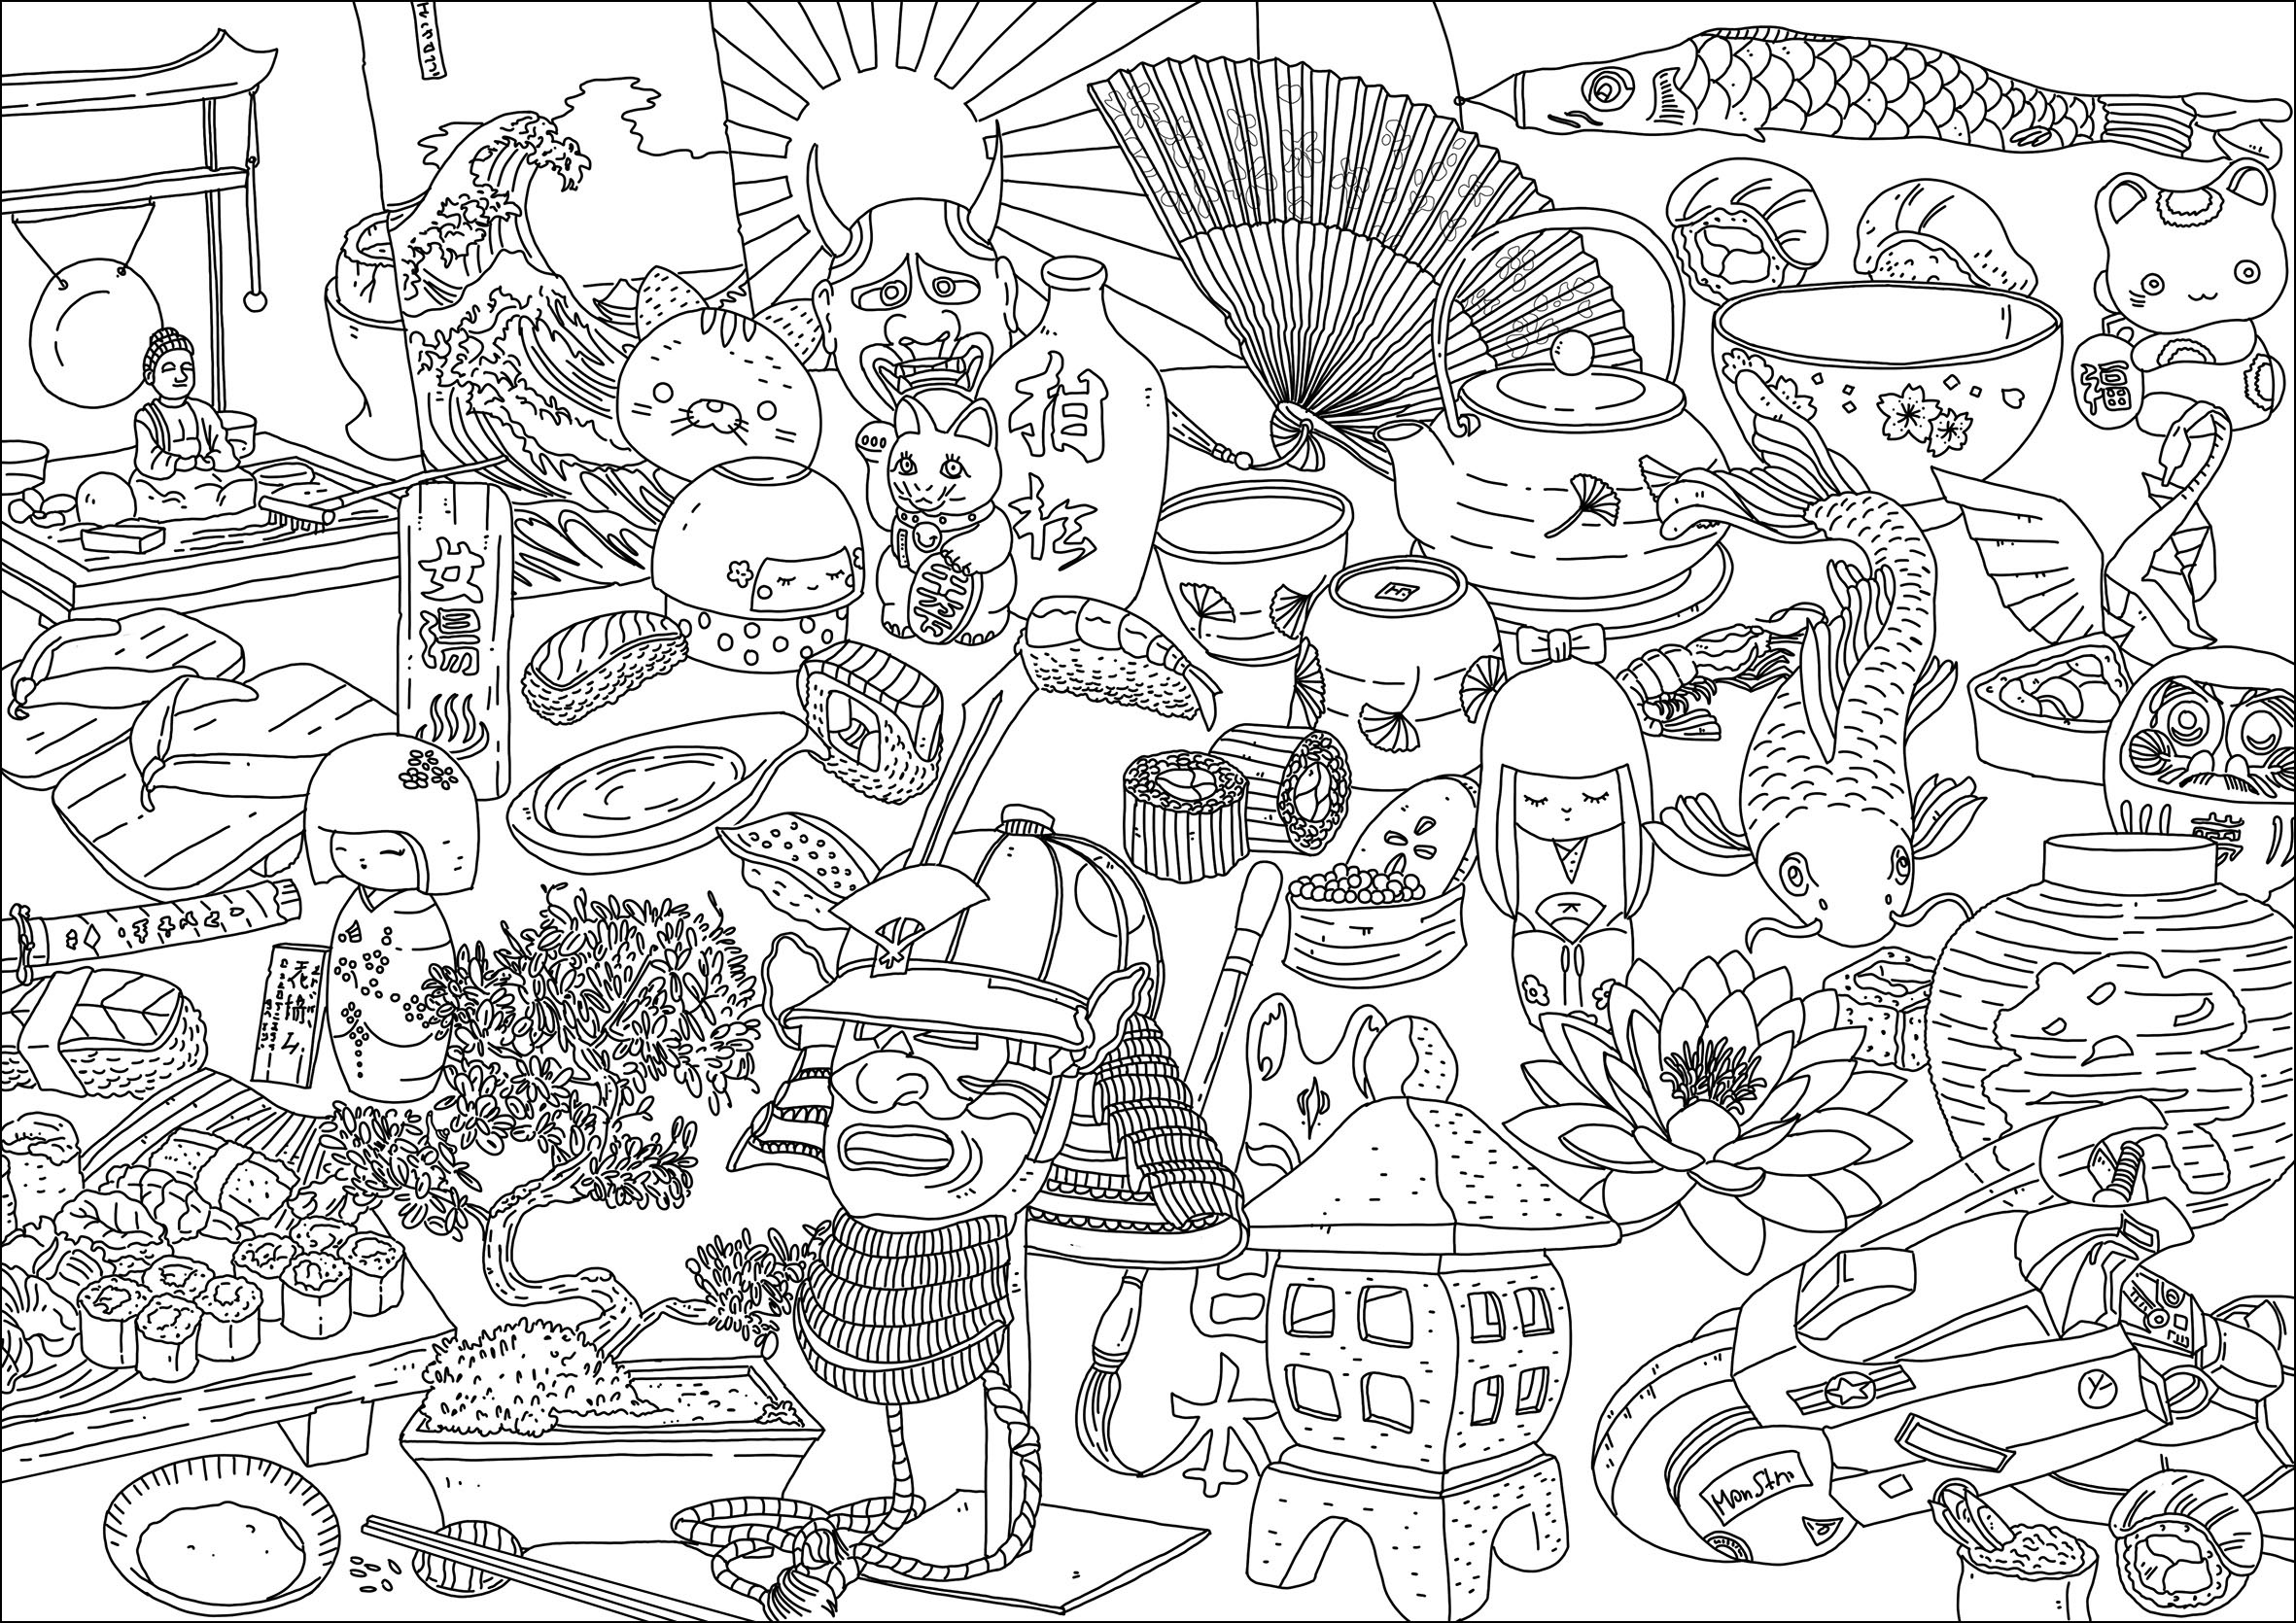 Verschiedene Symbole Japans. Maneki neko, Masken, Bonsai, Statuetten, Forelle, Lotus, große Welle, Flagge, Sushi .., Künstler : Frédéric Brogard